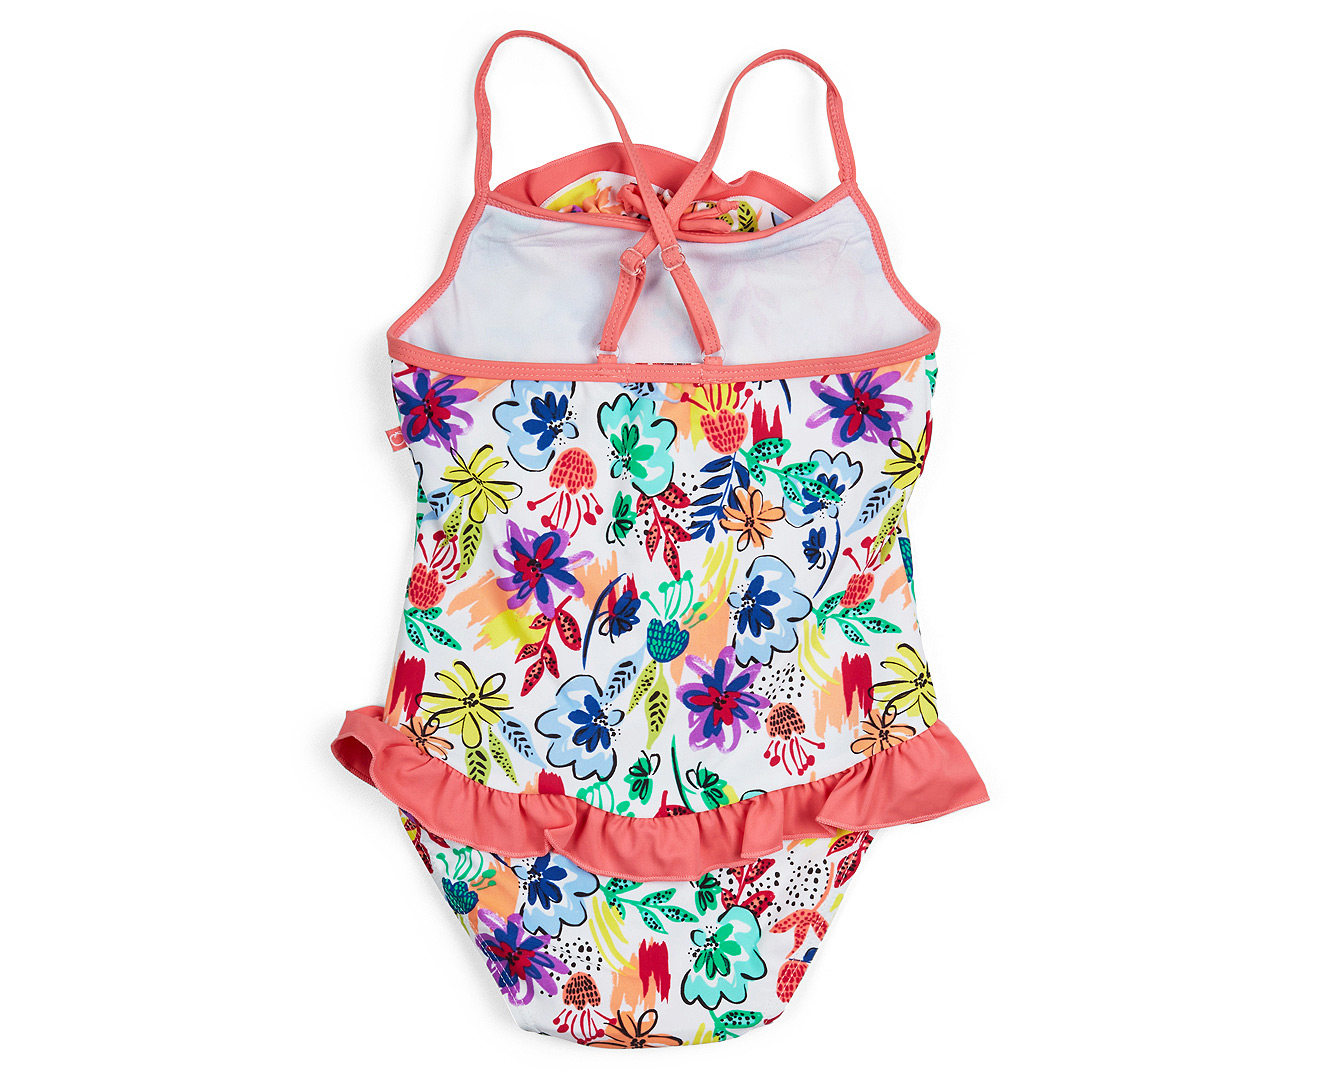 Plum Girls' Swimsuit - Floral | Mumgo.com.au